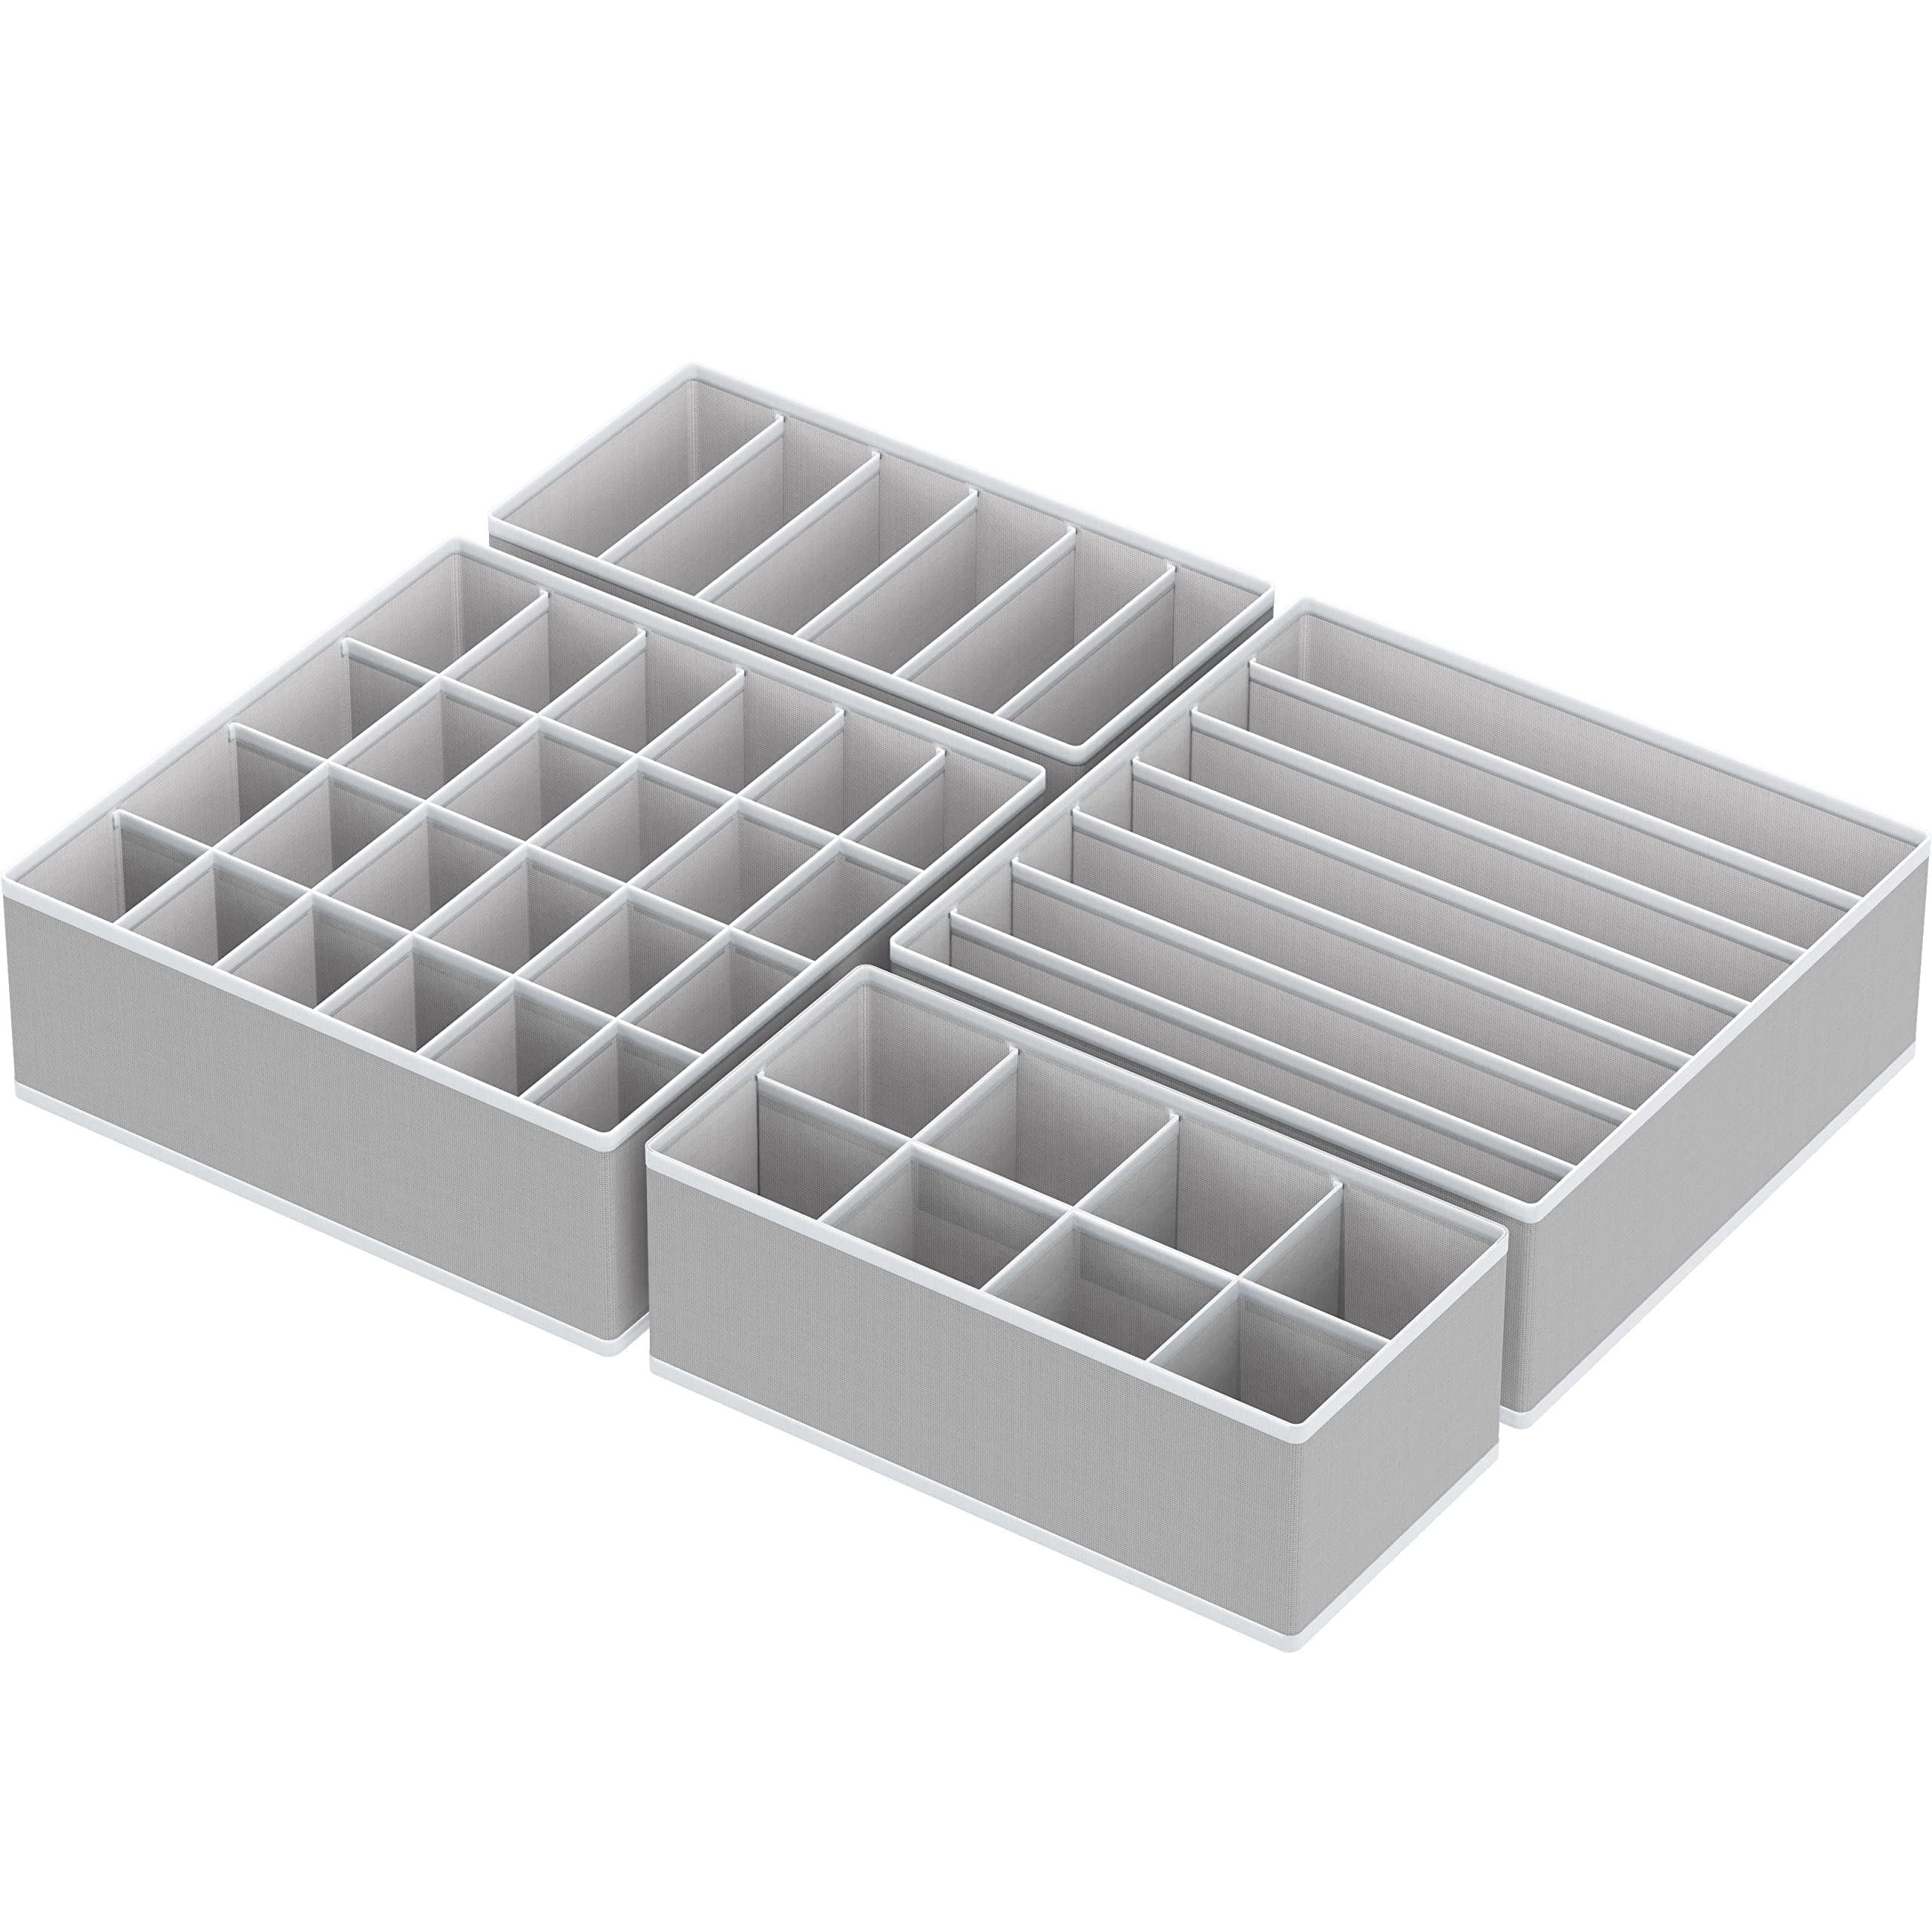 Simple Houseware Cabinet Organizer, Adjustable Dividers Lids Storage,  13''x10'', White